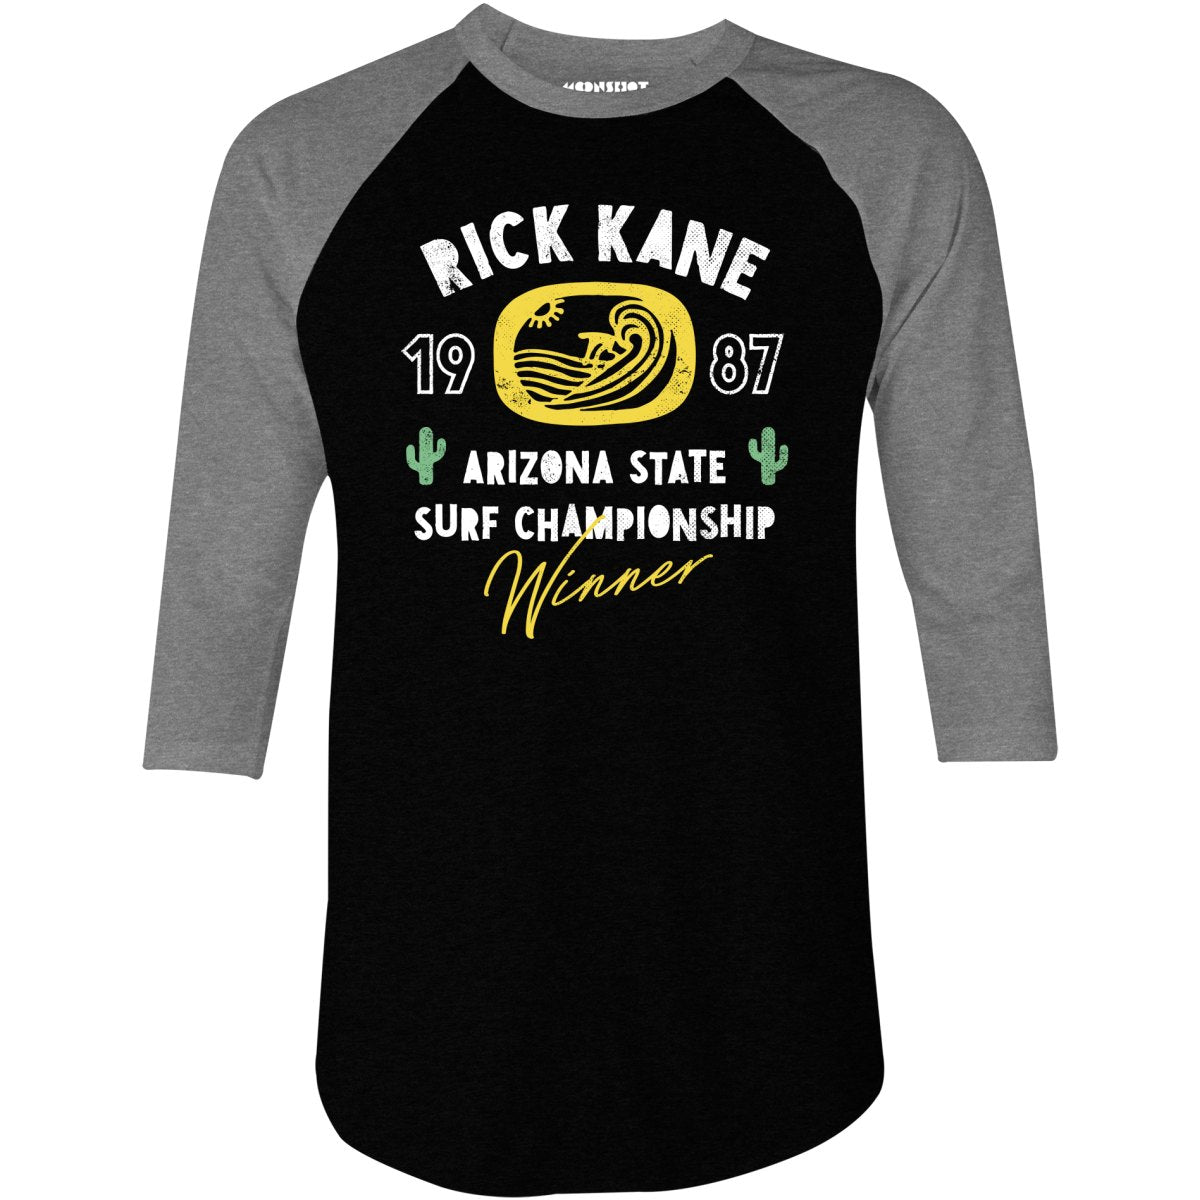 Rick Kane - Arizona State Surf Championship - 3/4 Sleeve Raglan T-Shirt